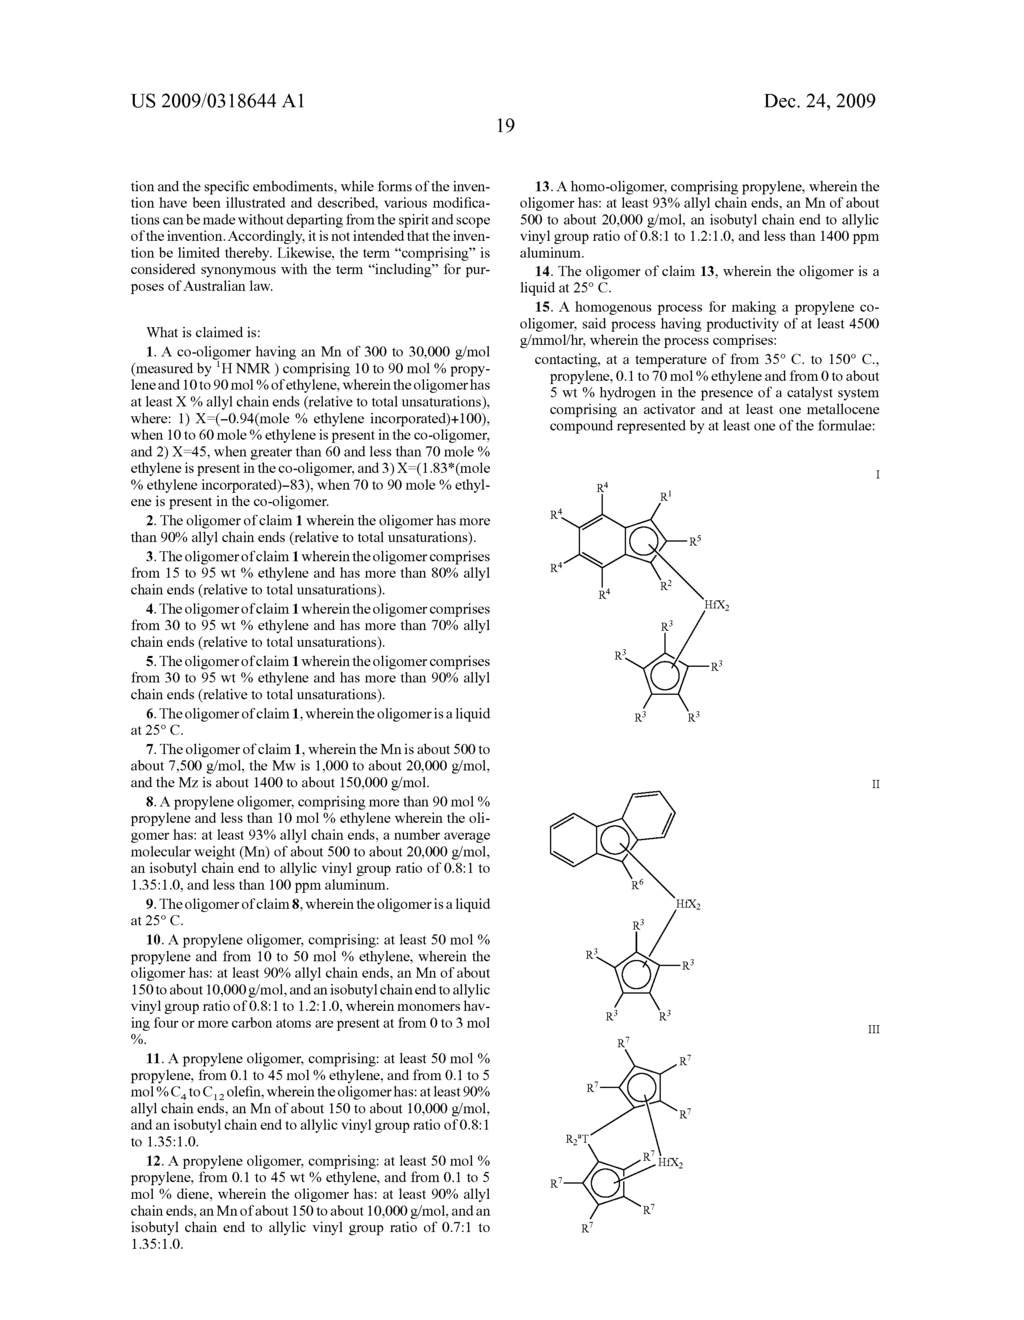 High Vinyl Terminated Propylene Based Oligomers - diagram, schematic, and image 22